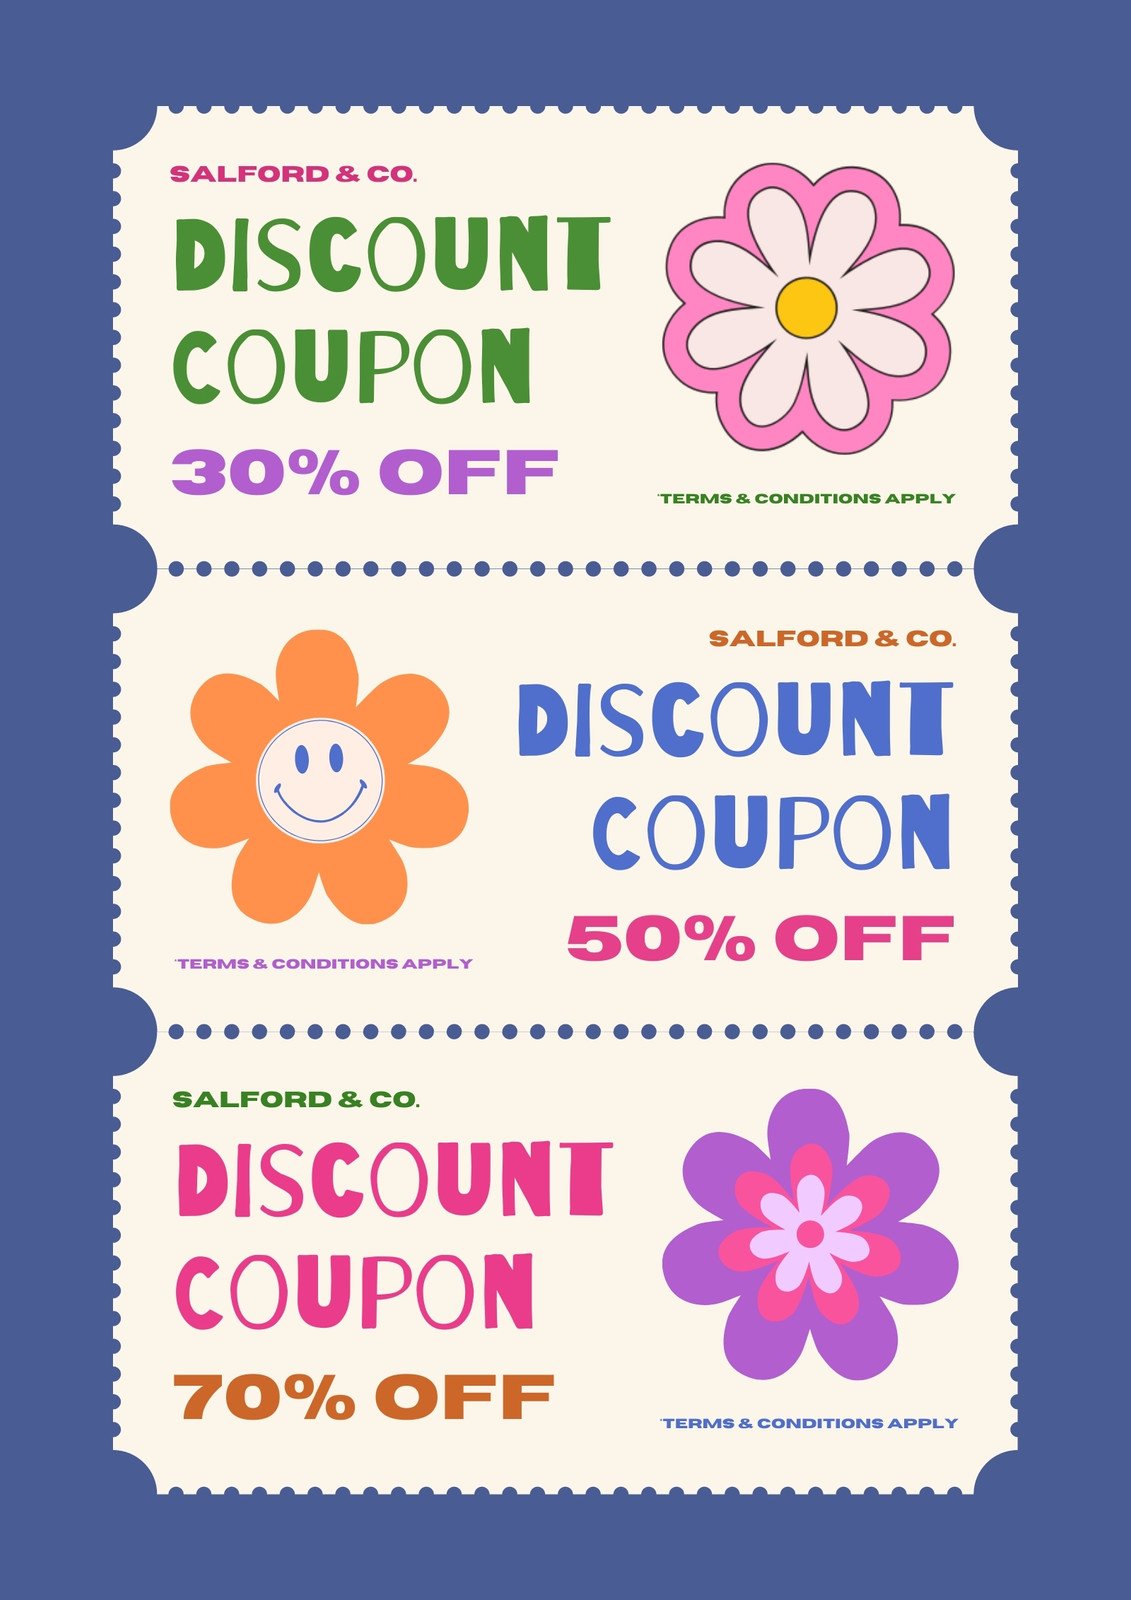 Free, printable, customizable coupon templates